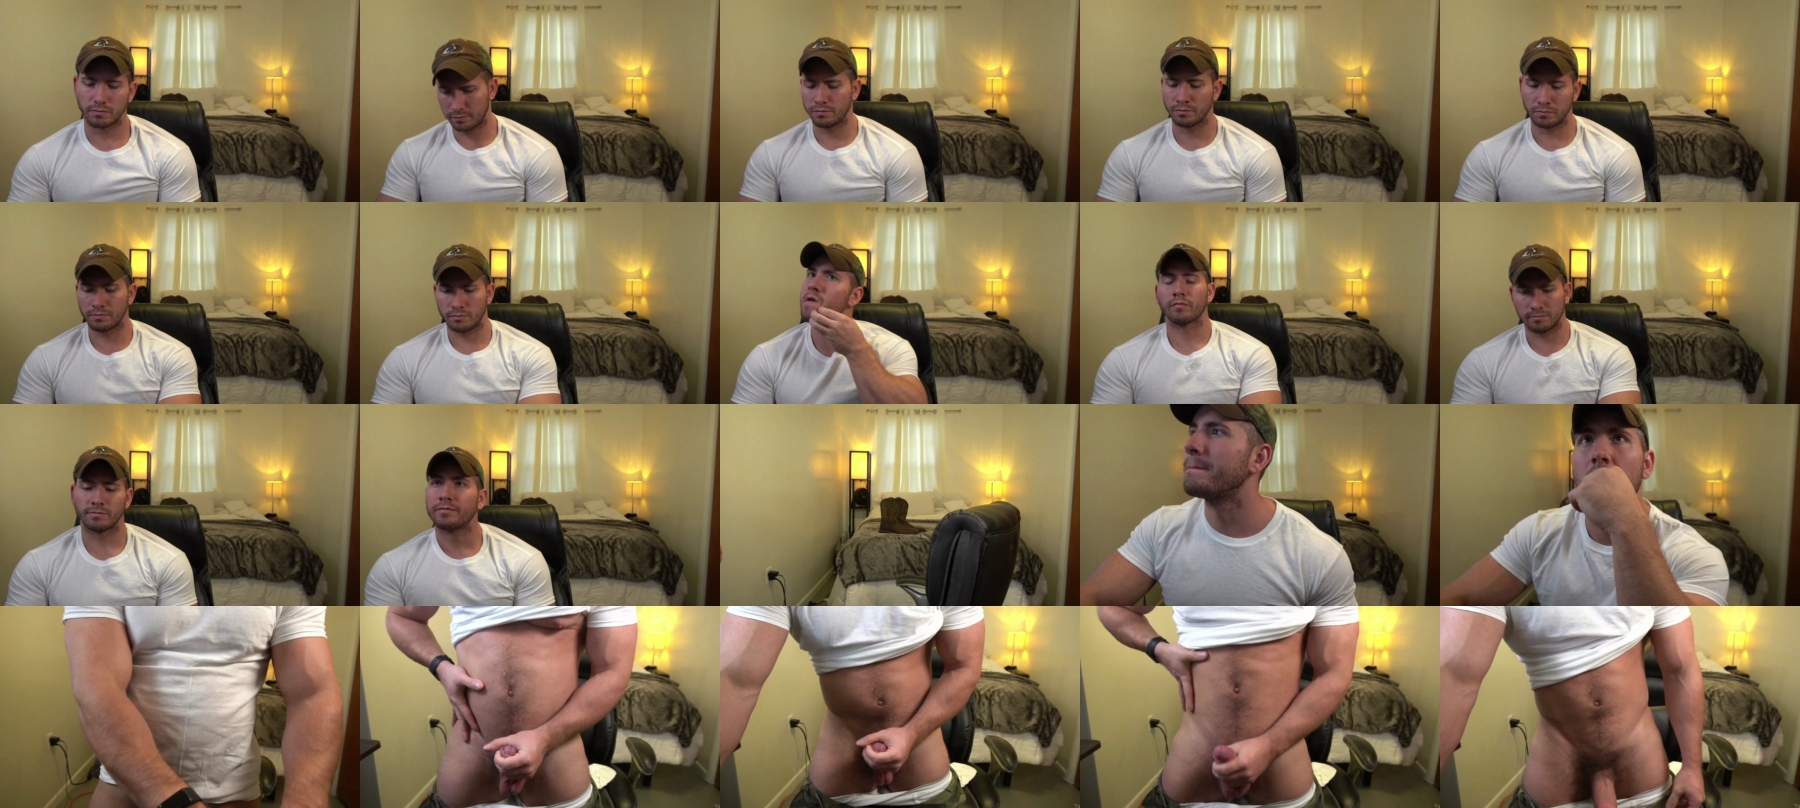 Hotmuscles6t9  19-11-2021 Male Webcam